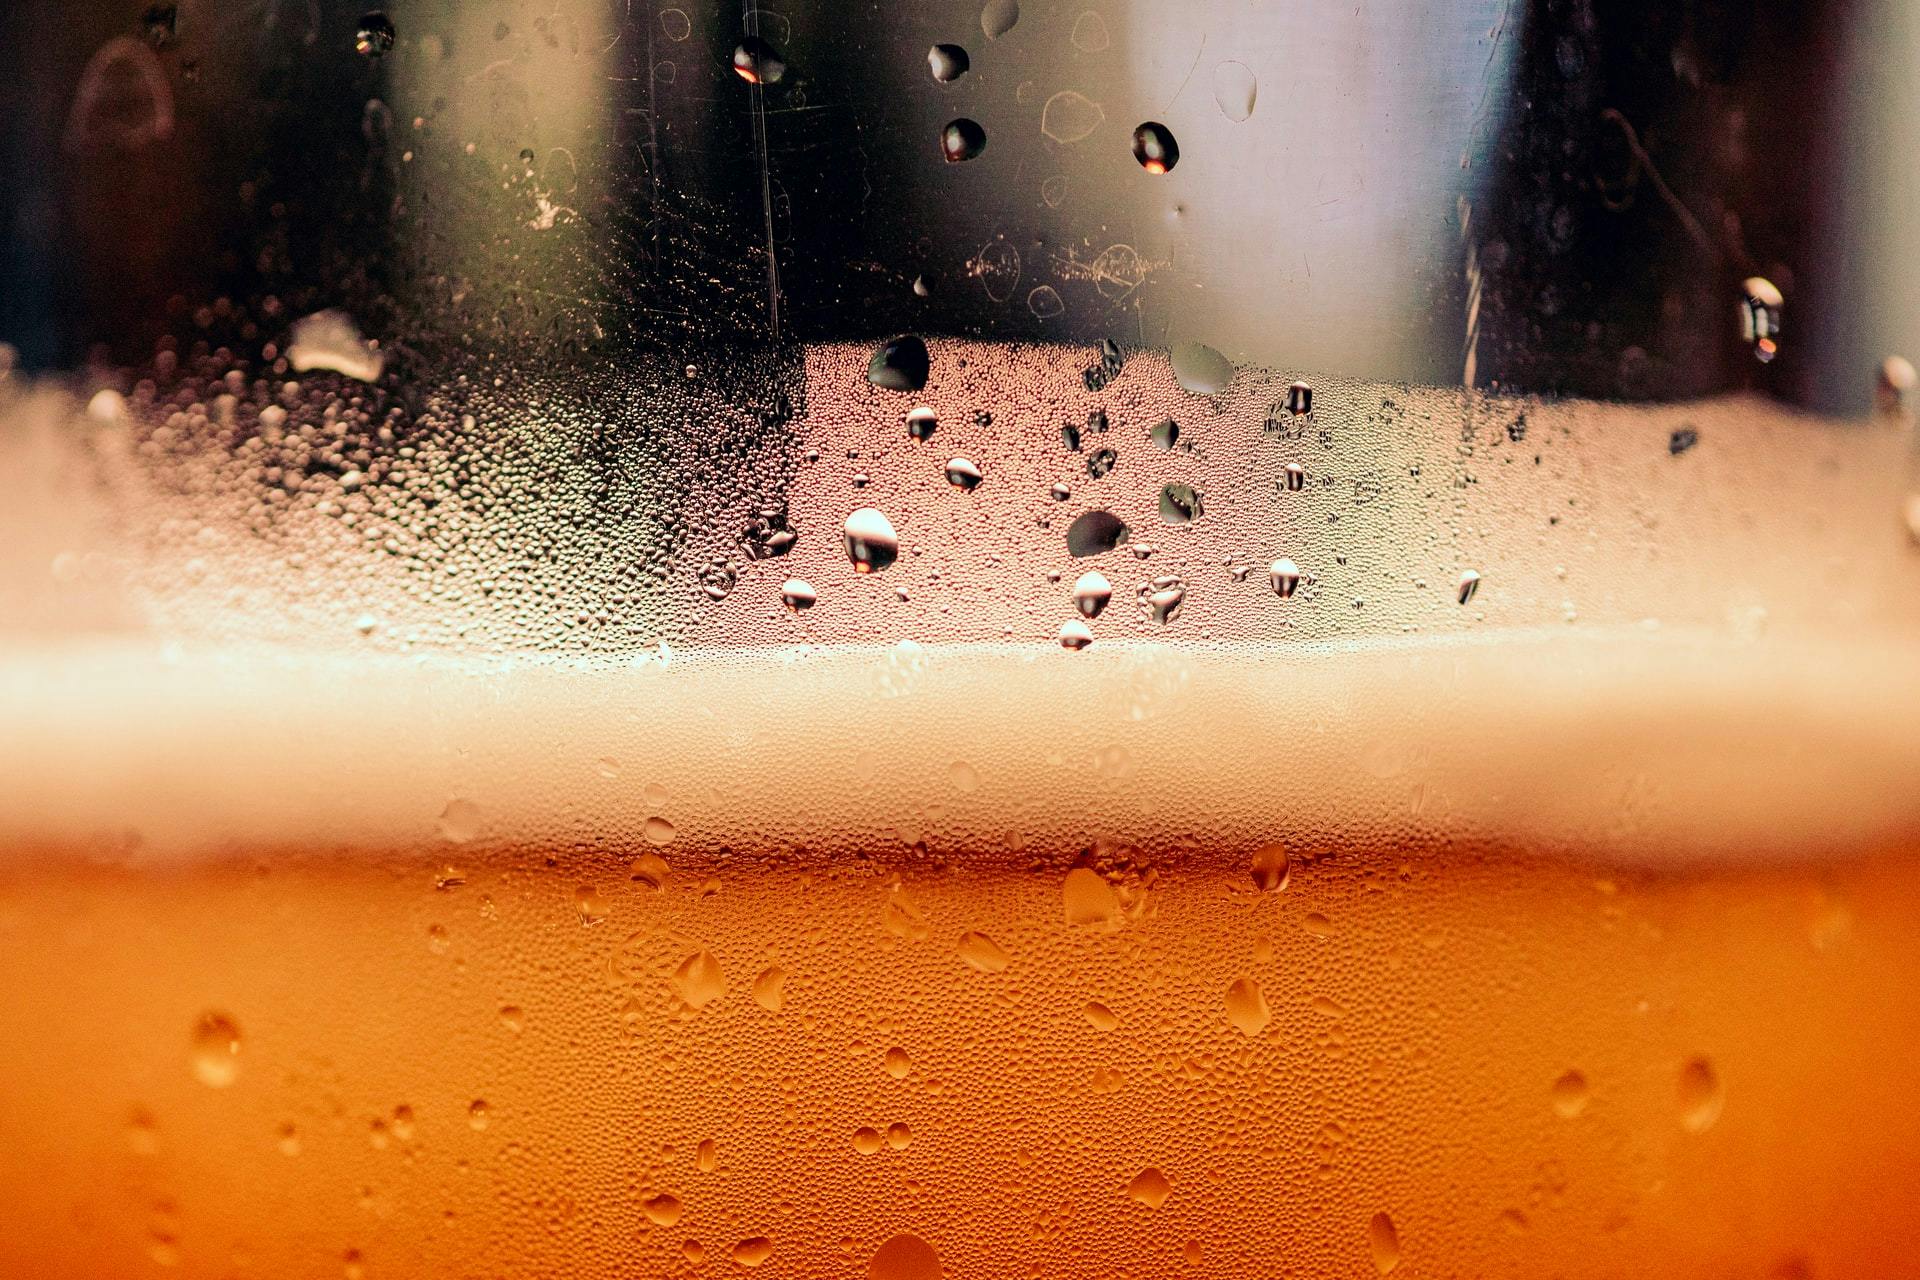 macro shot of a beer glass